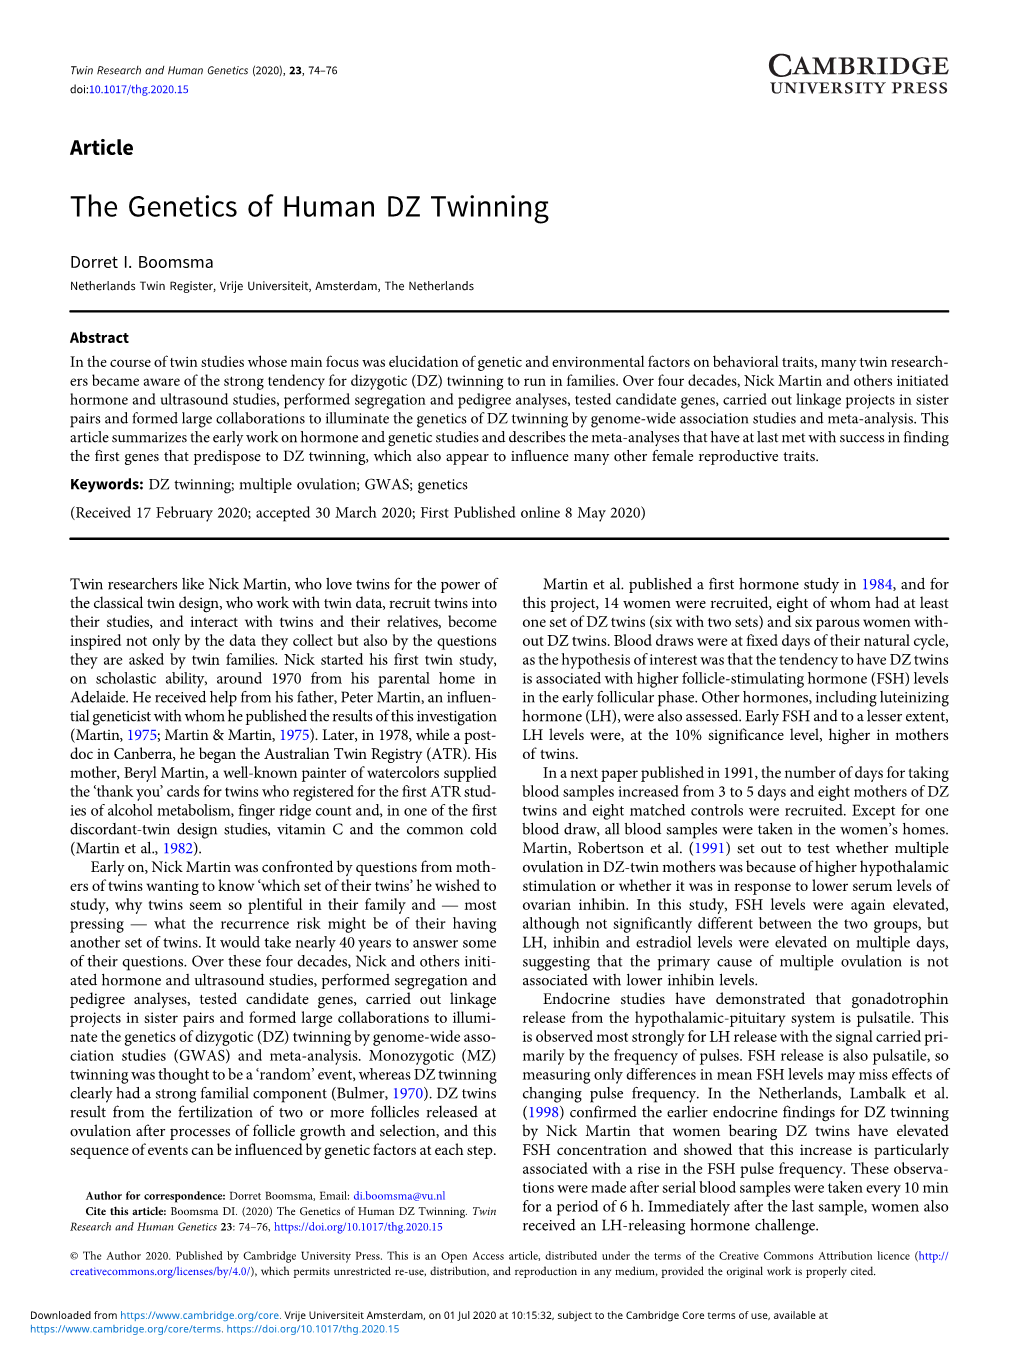 The Genetics of Human DZ Twinning